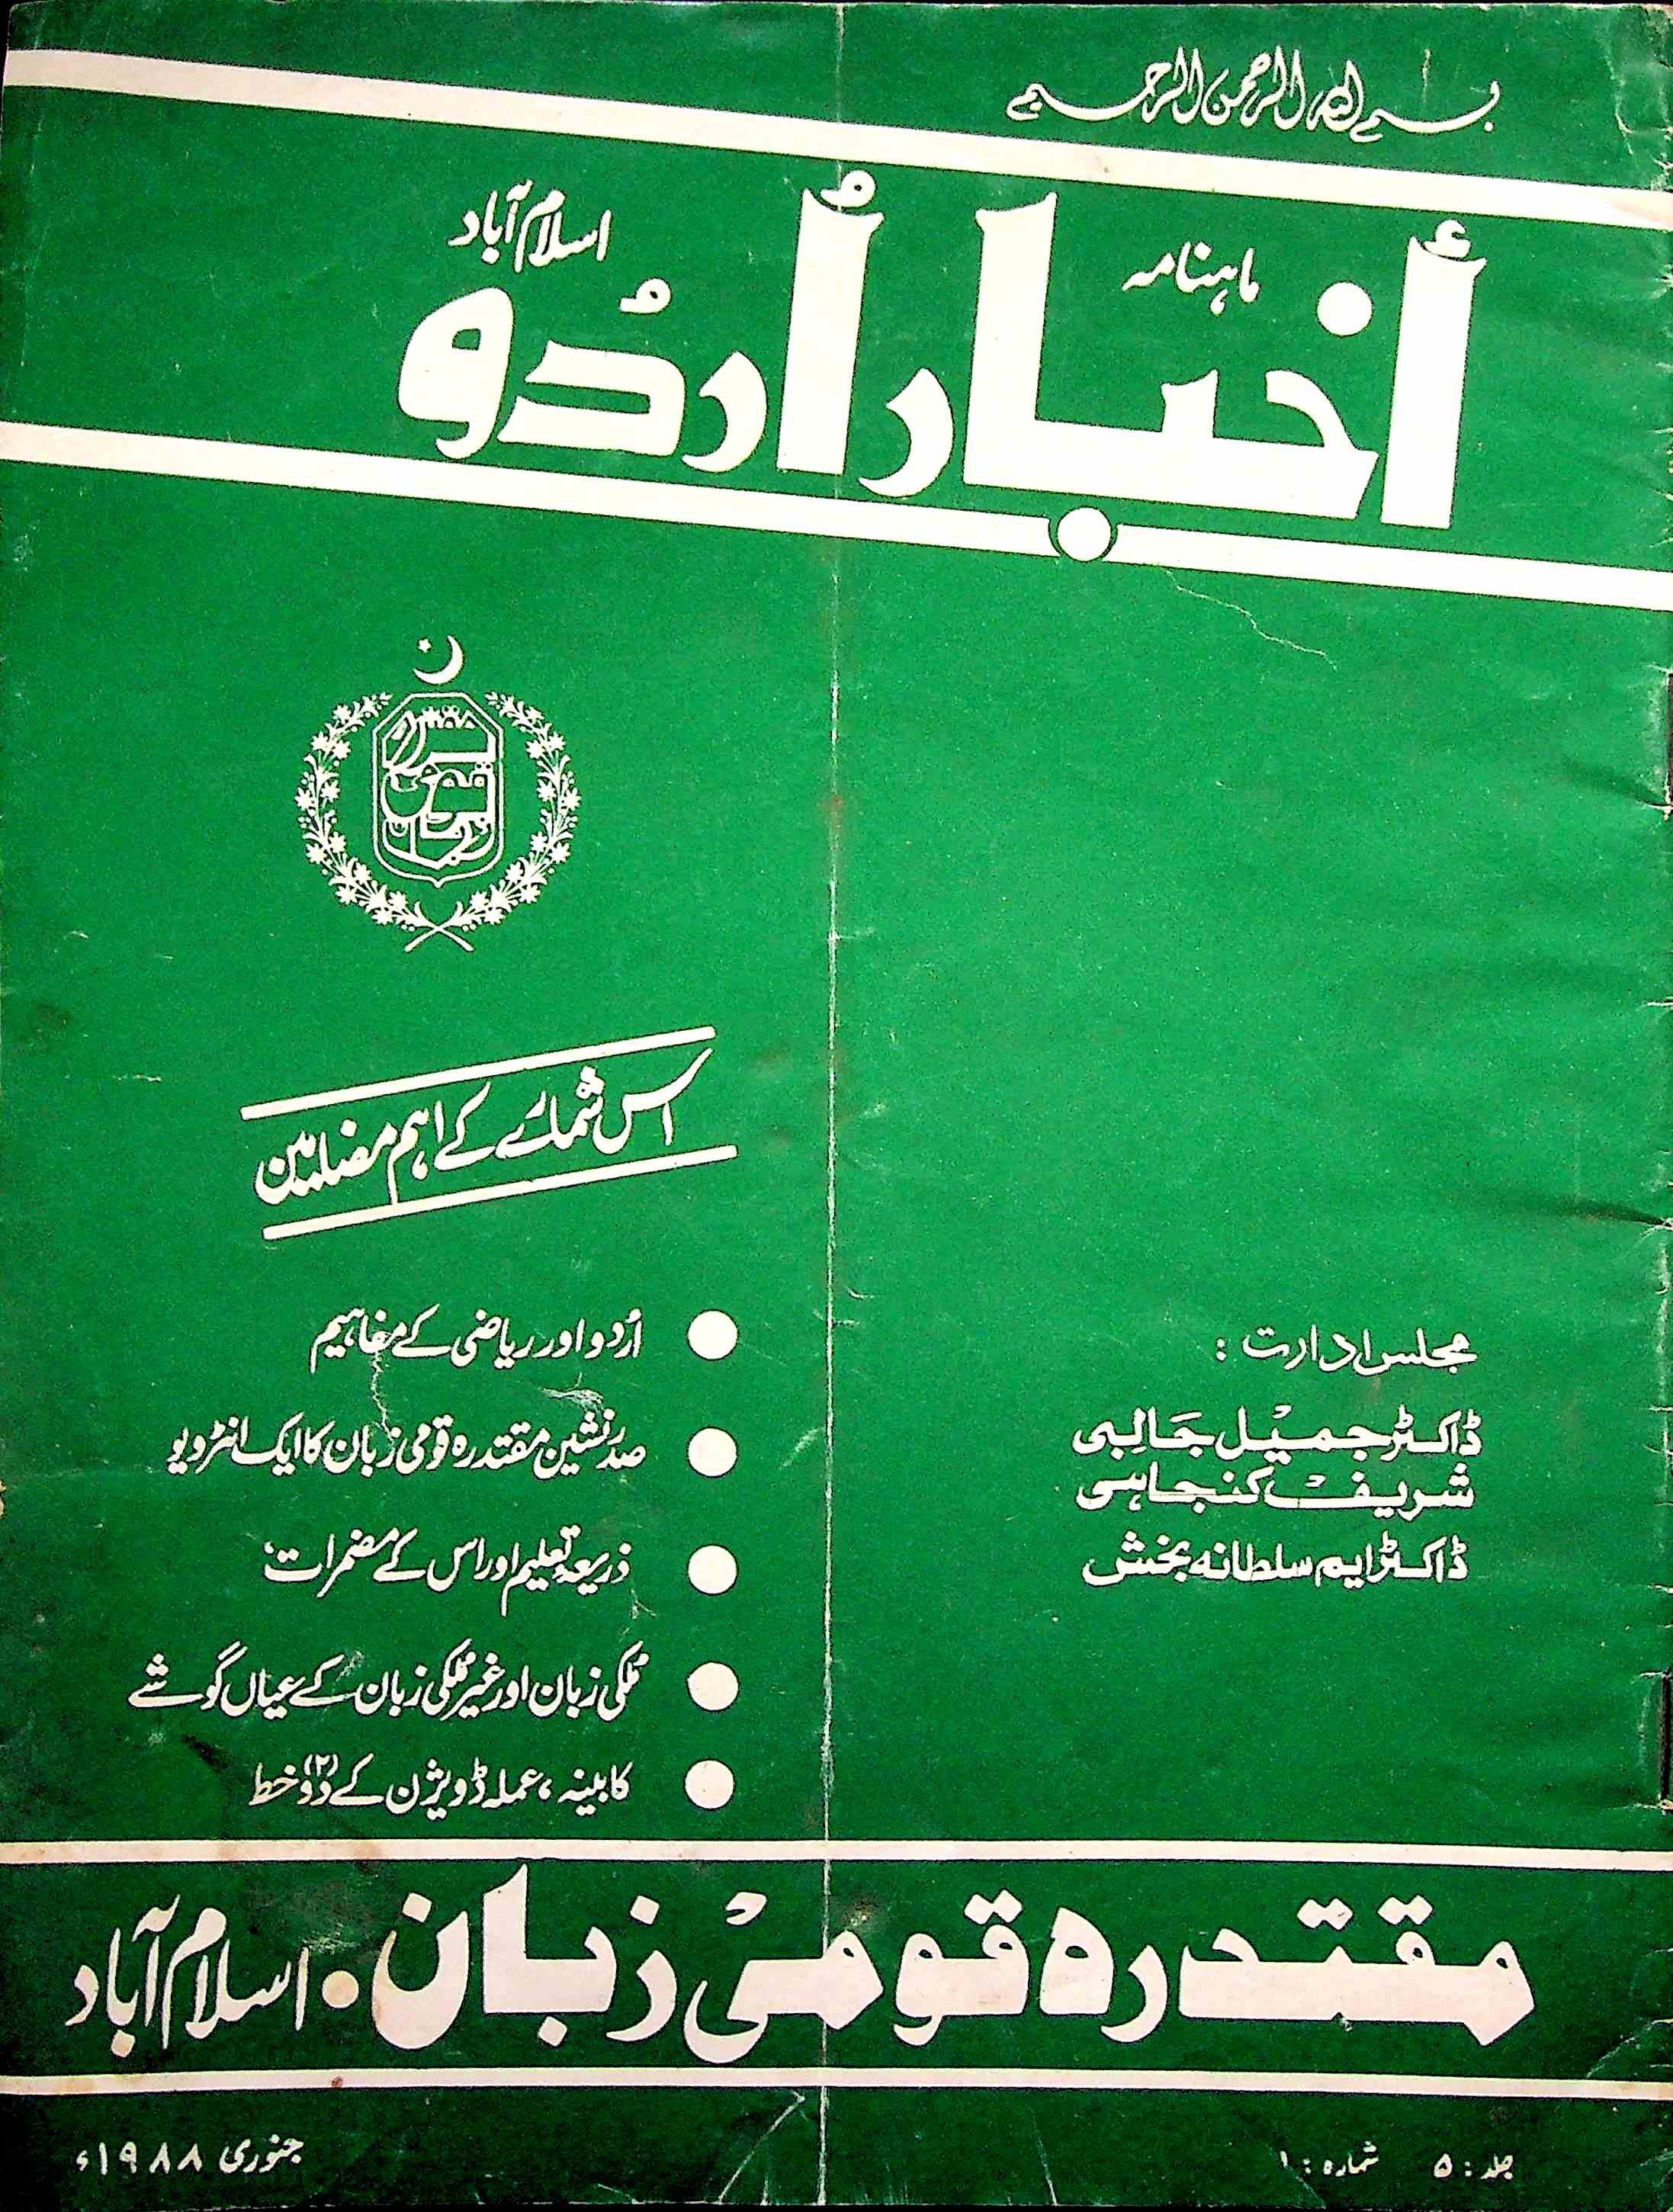 اخبار اردو، اسلام آباد